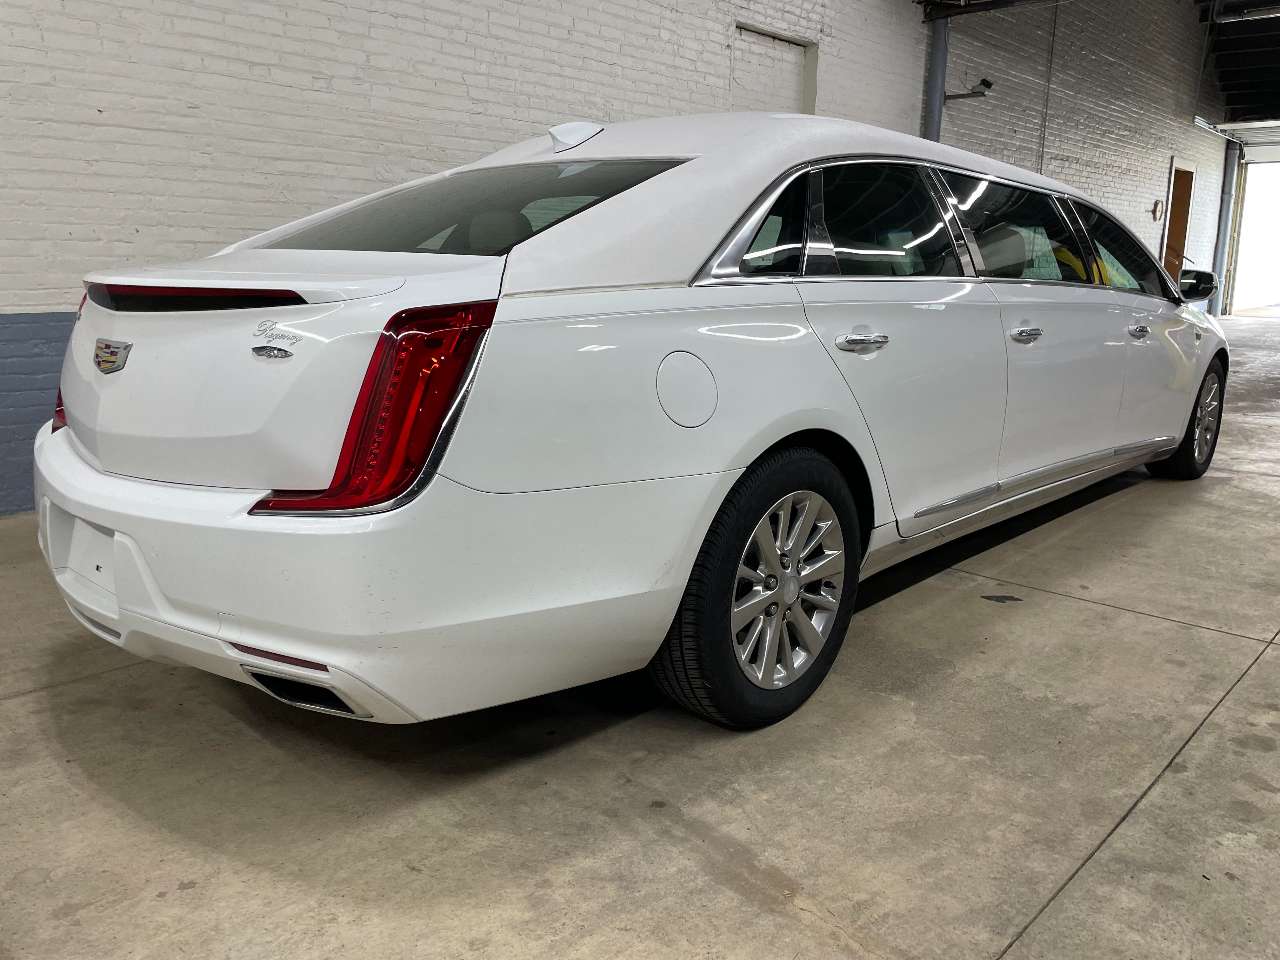 2019 Cadillac Eagle Kingsley Limousine 1695743845260